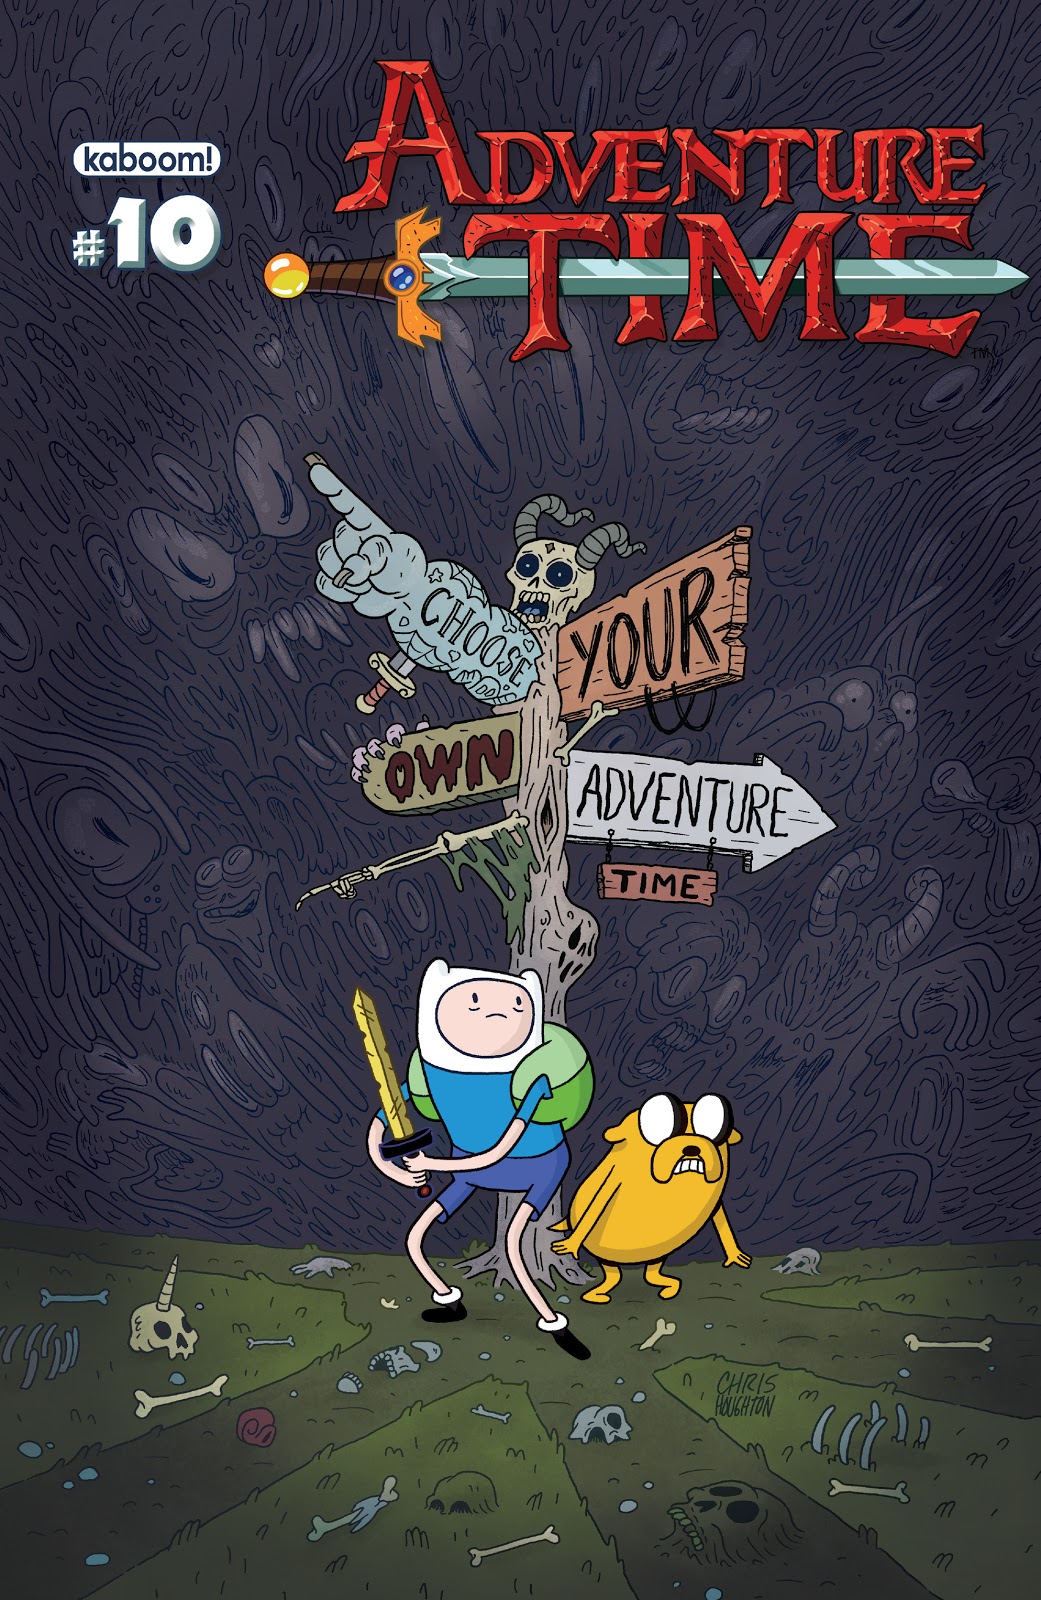 Adventure Time (season 10) - Wikipedia